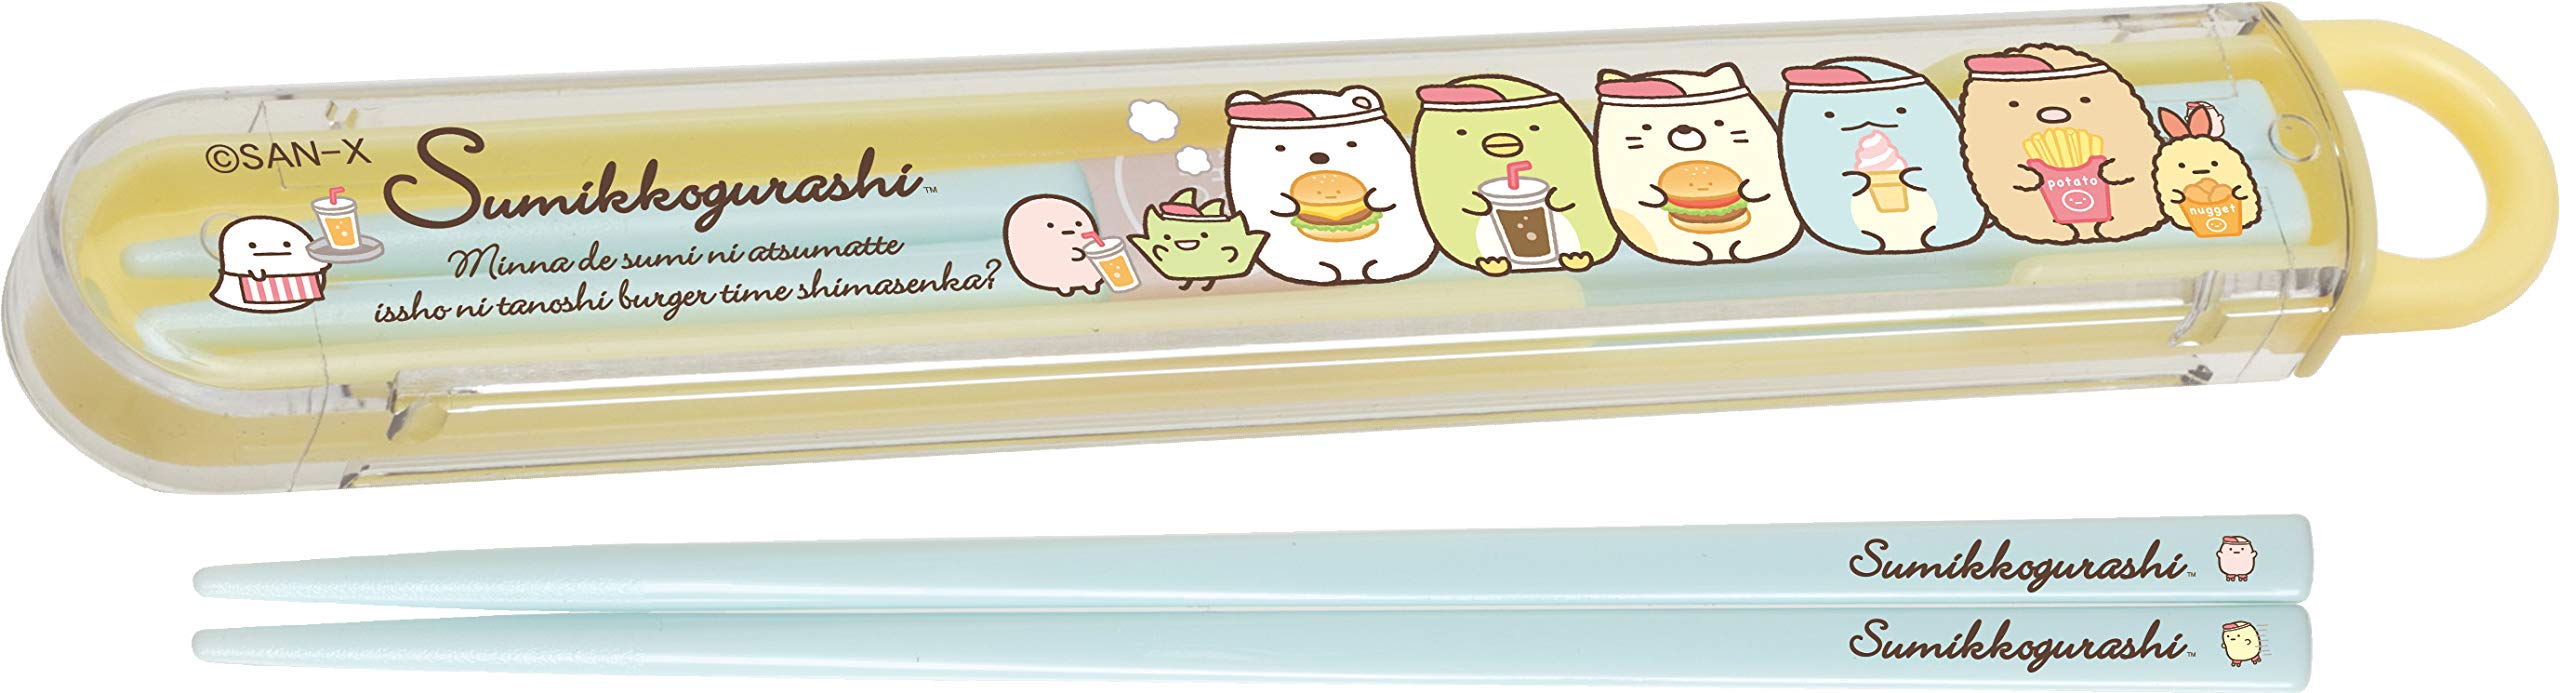 SAN-X - Sumikko Gurashi Chopsticks With Case